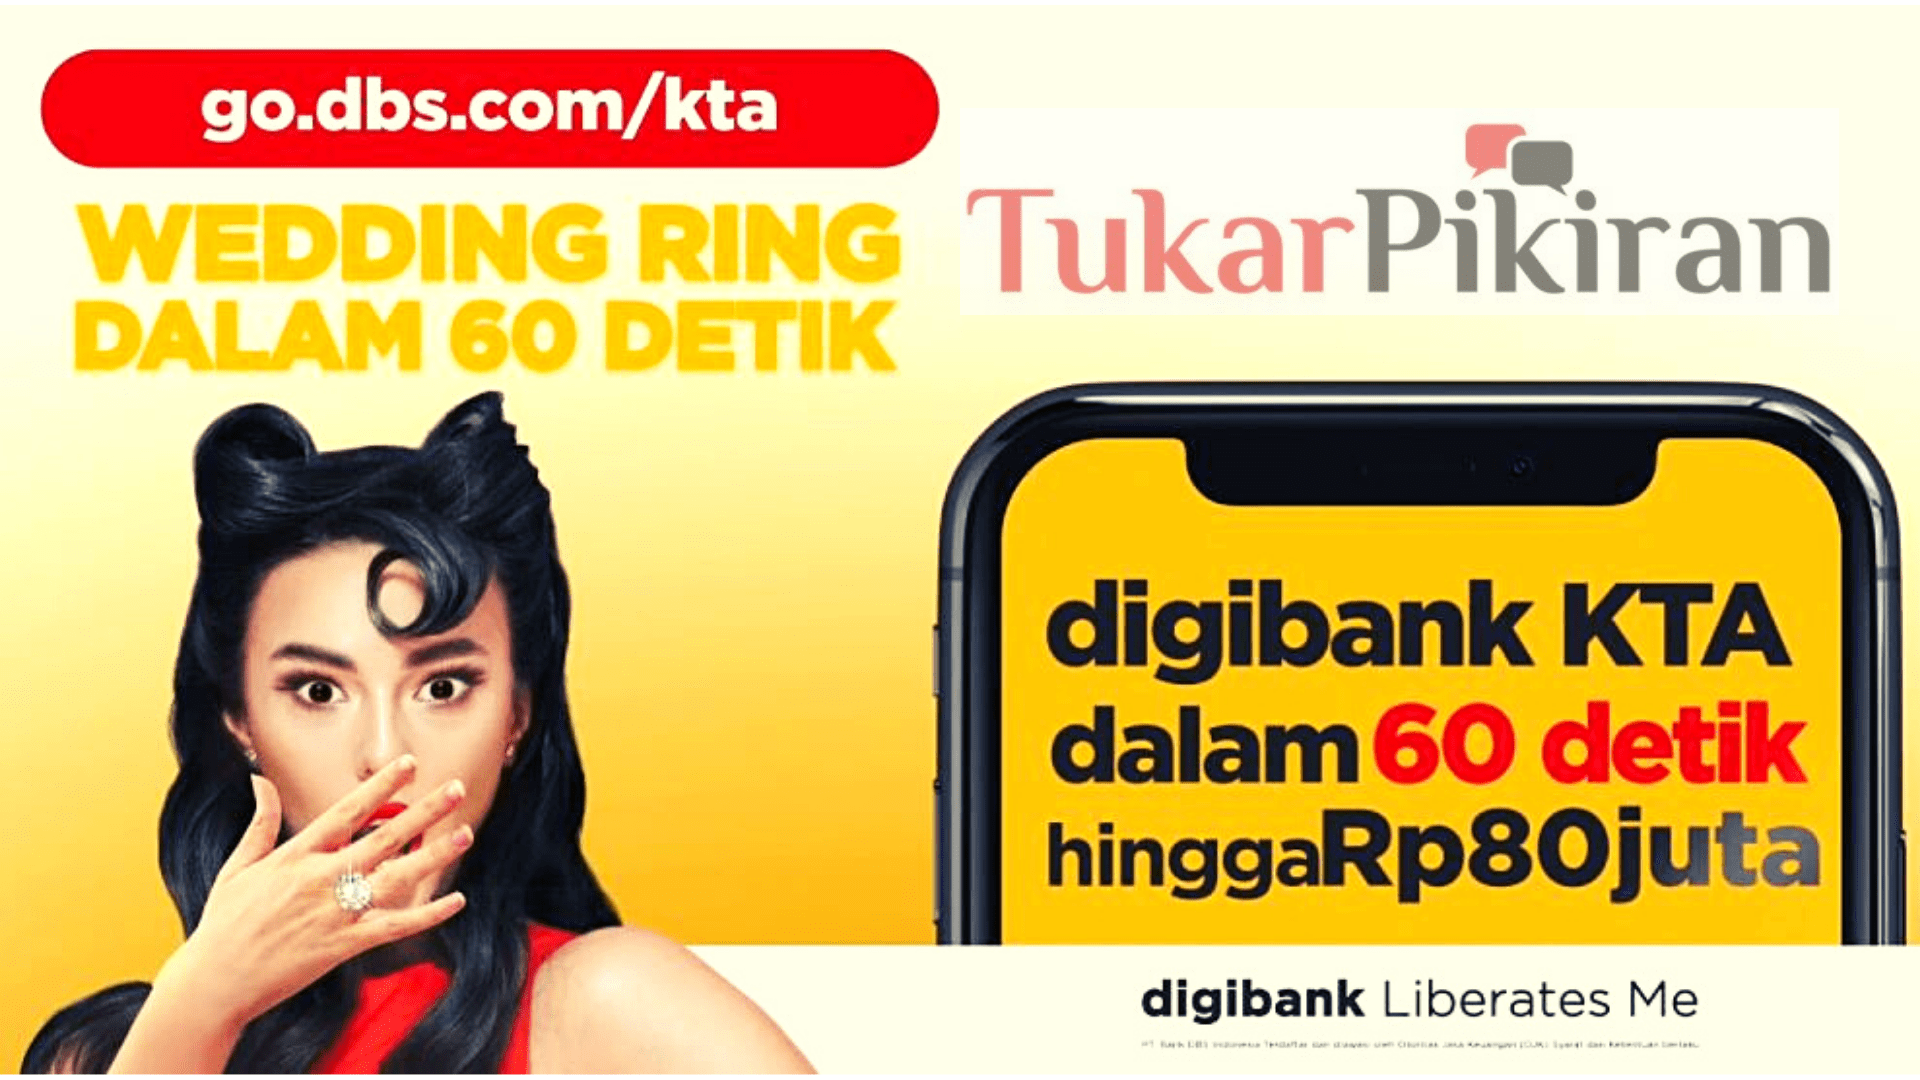 Digibank KTA Instant